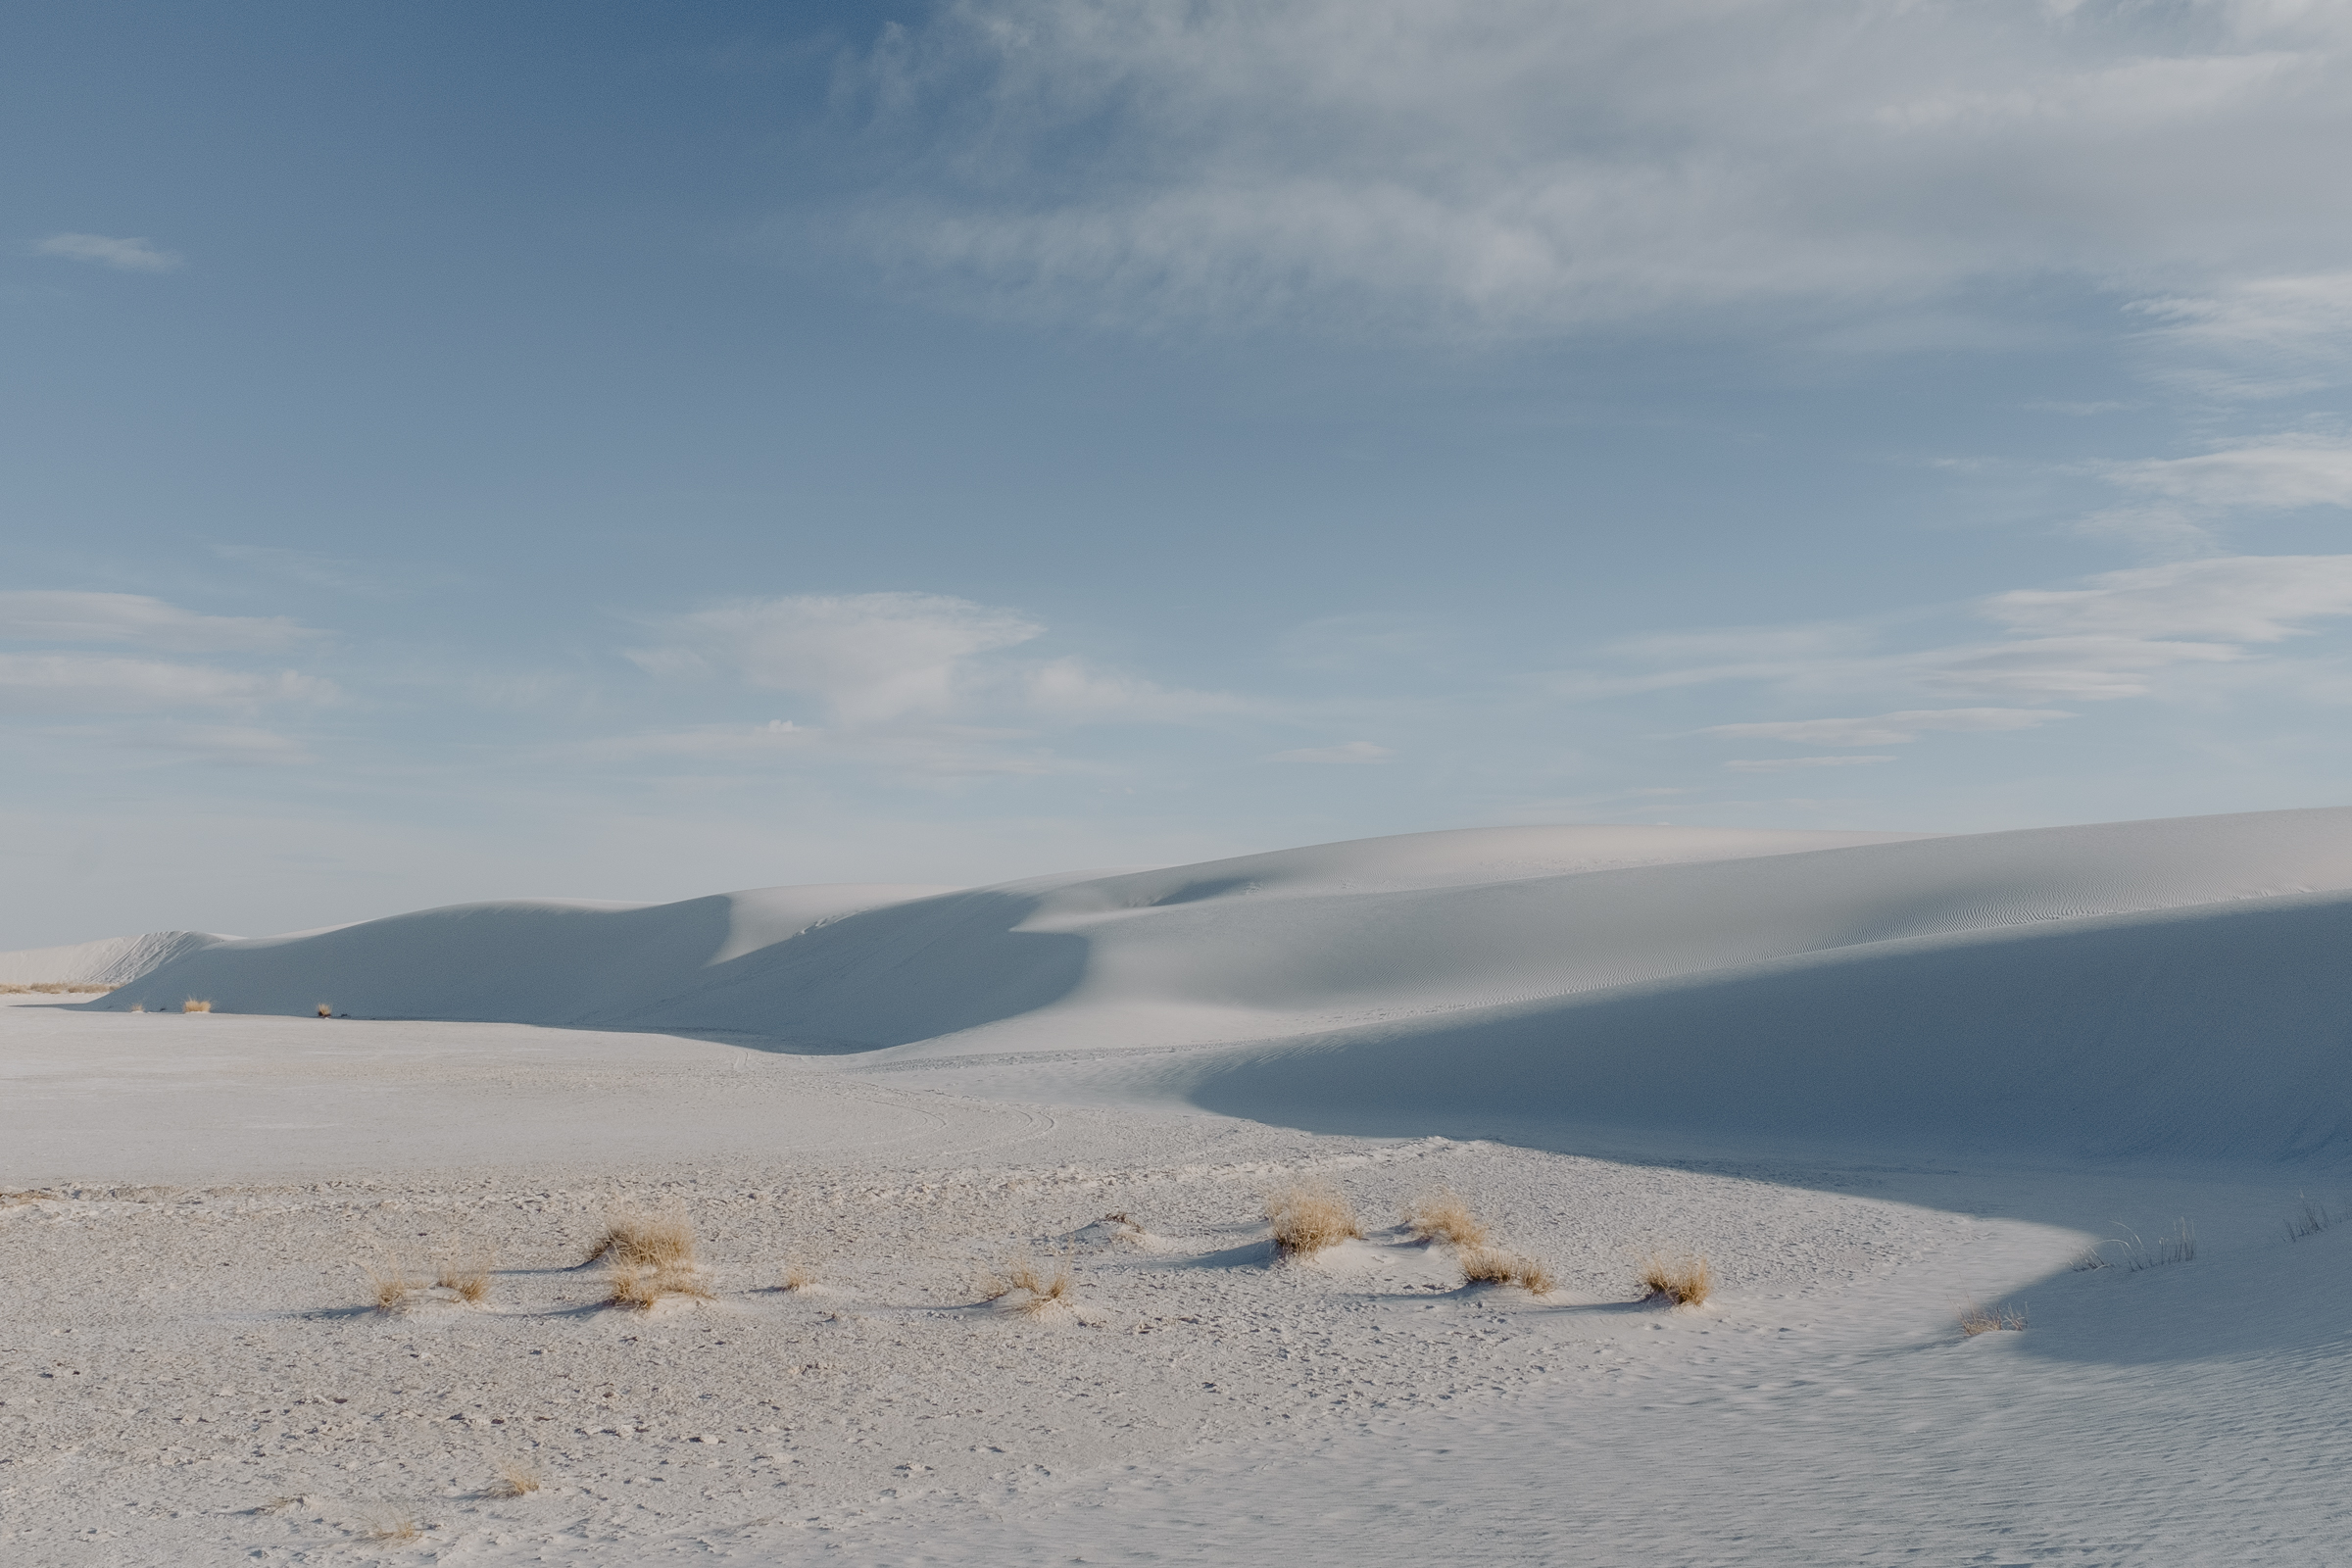 10. White Sands National Monument, NM